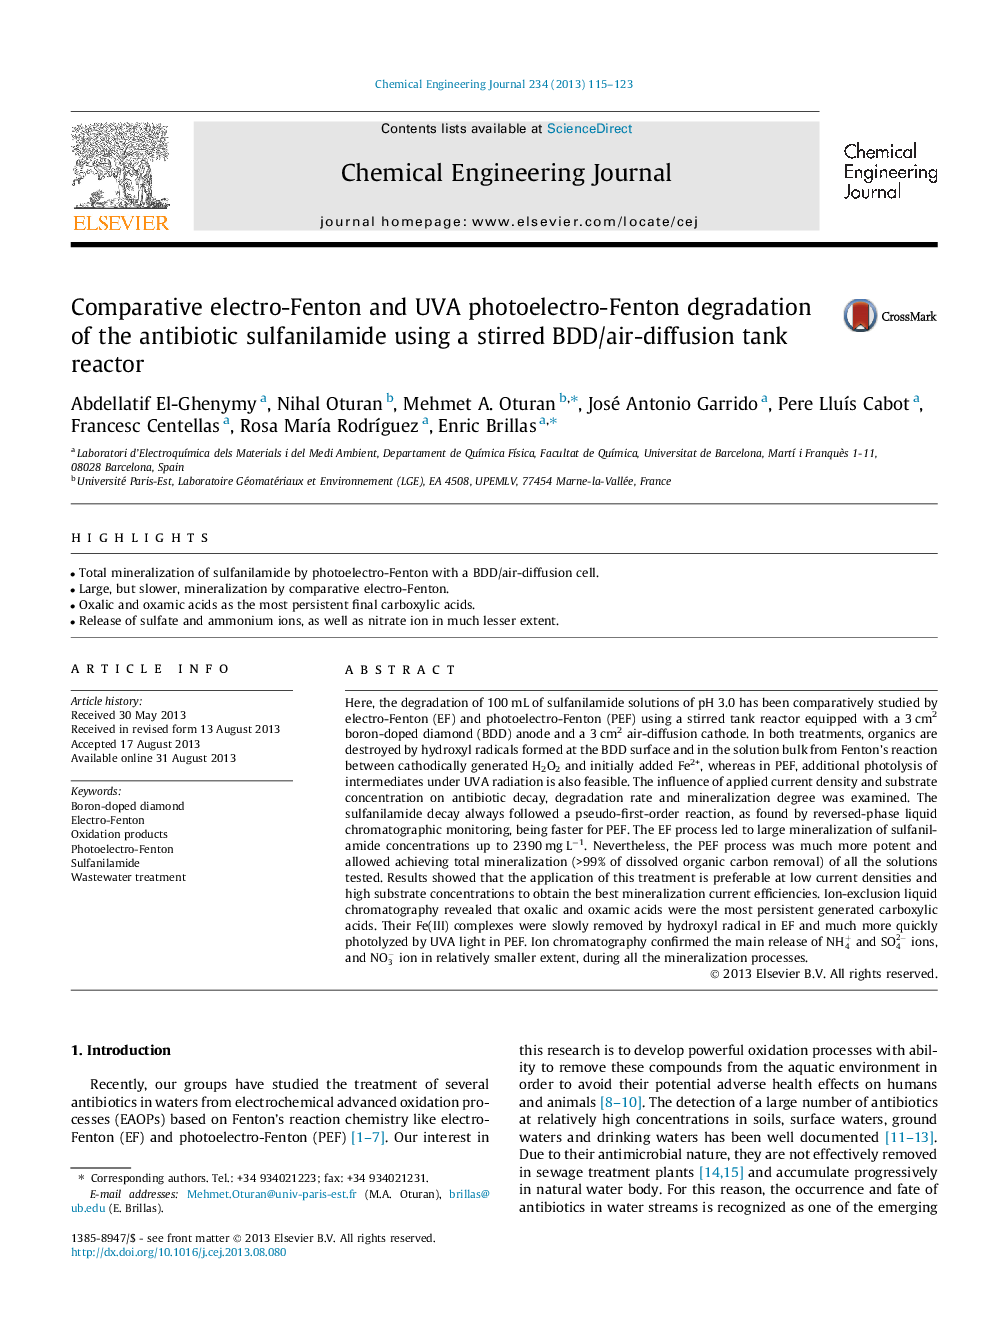 Comparative electro-Fenton and UVA photoelectro-Fenton degradation of the antibiotic sulfanilamide using a stirred BDD/air-diffusion tank reactor